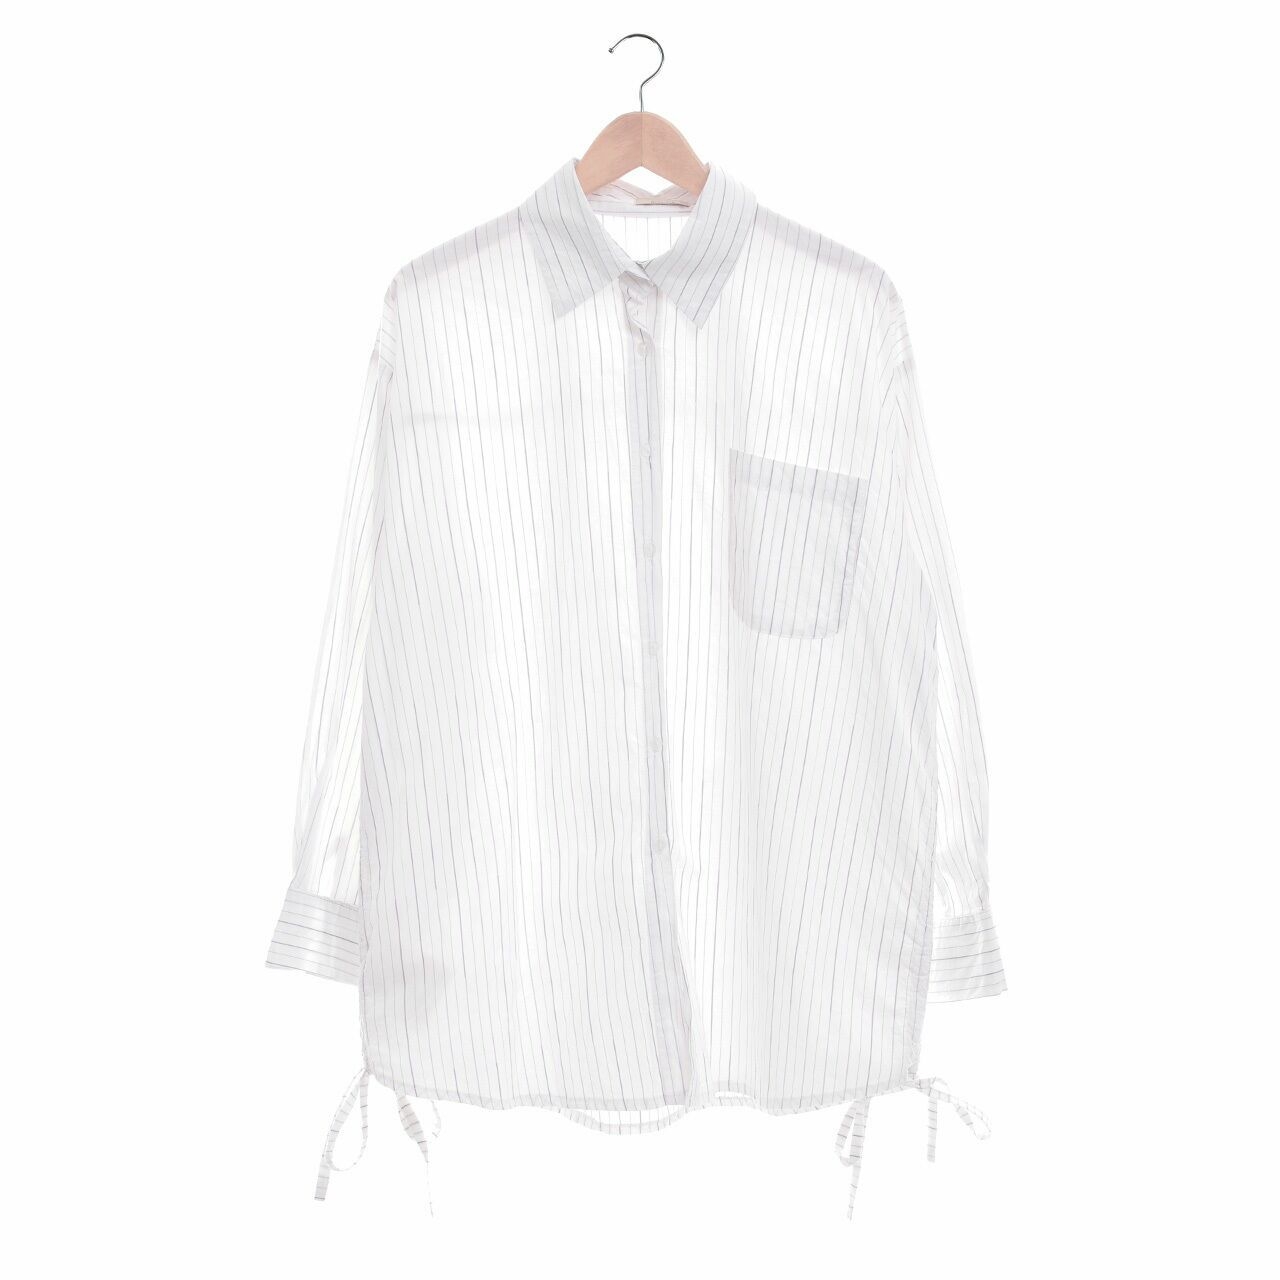 Grinitty White Stripes Shirt